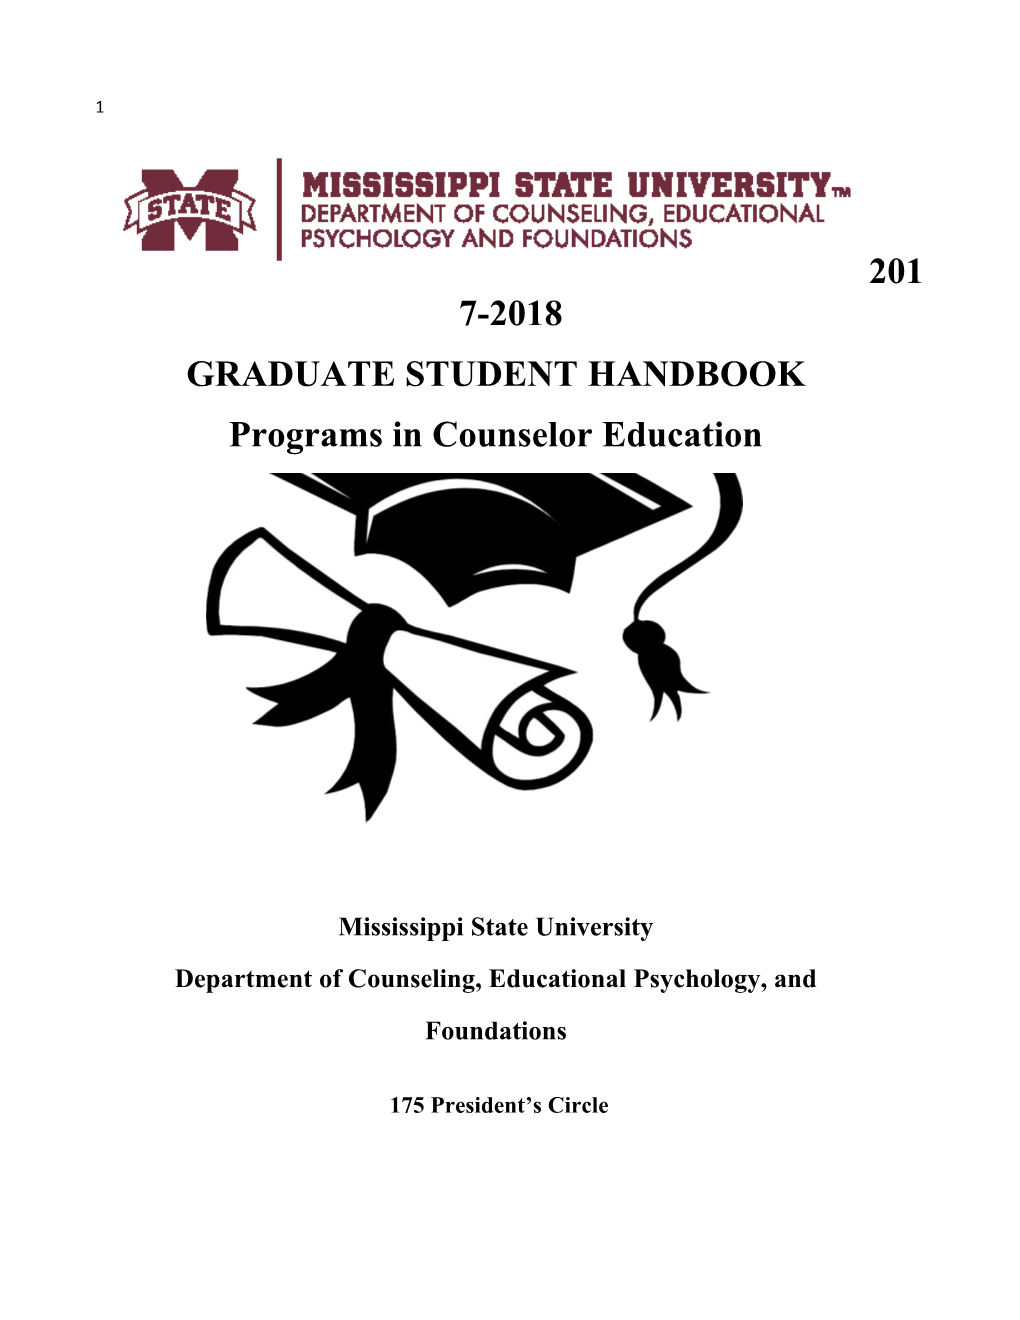 Graduate Studenthandbook